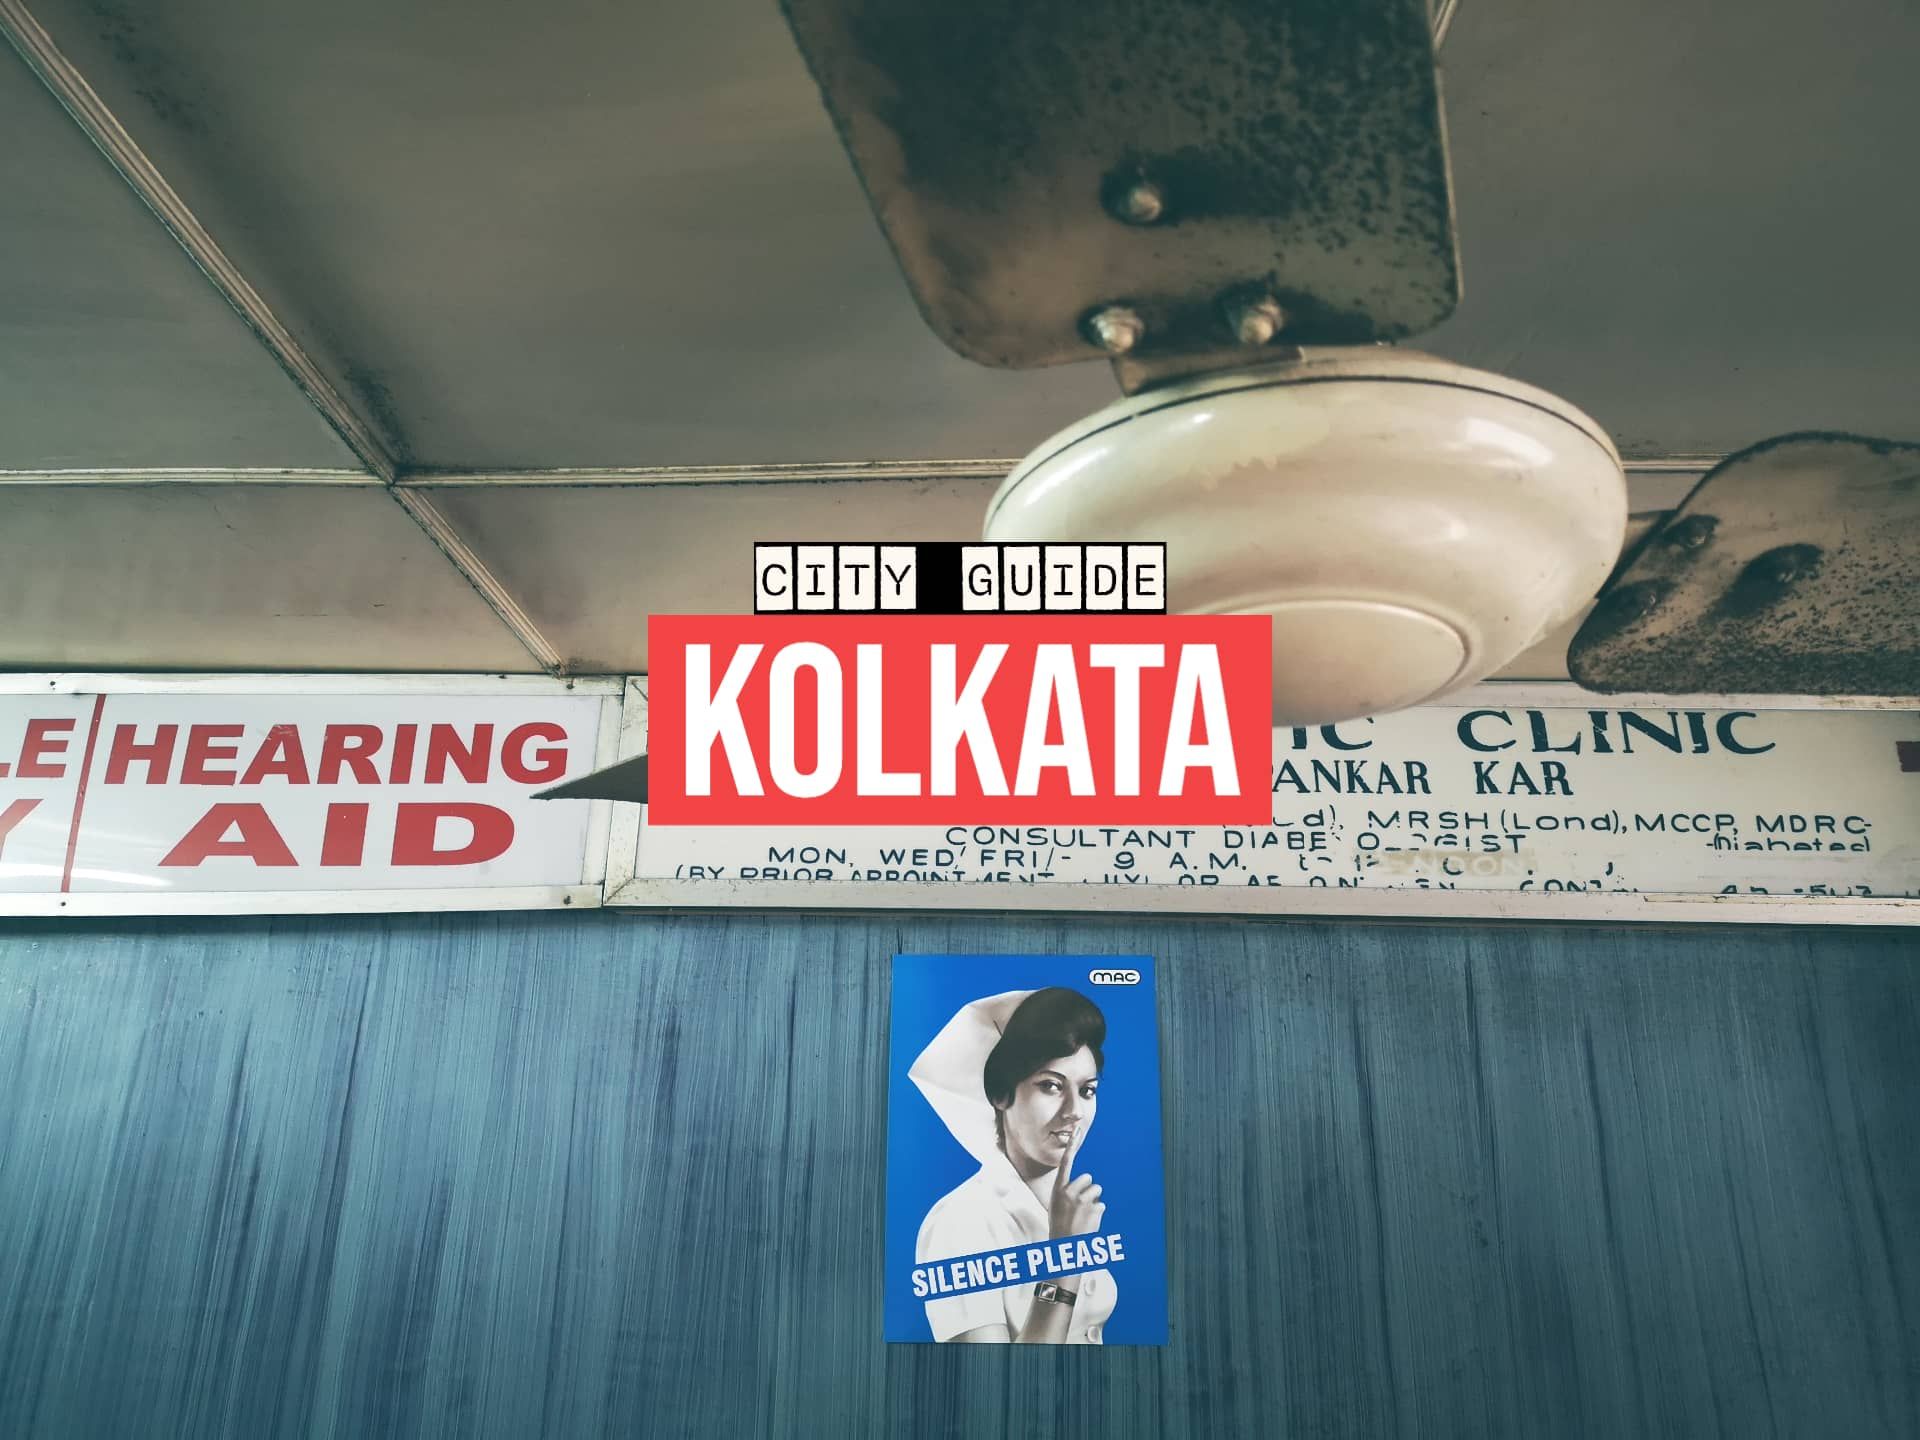 Banner image of city guide to kolkata